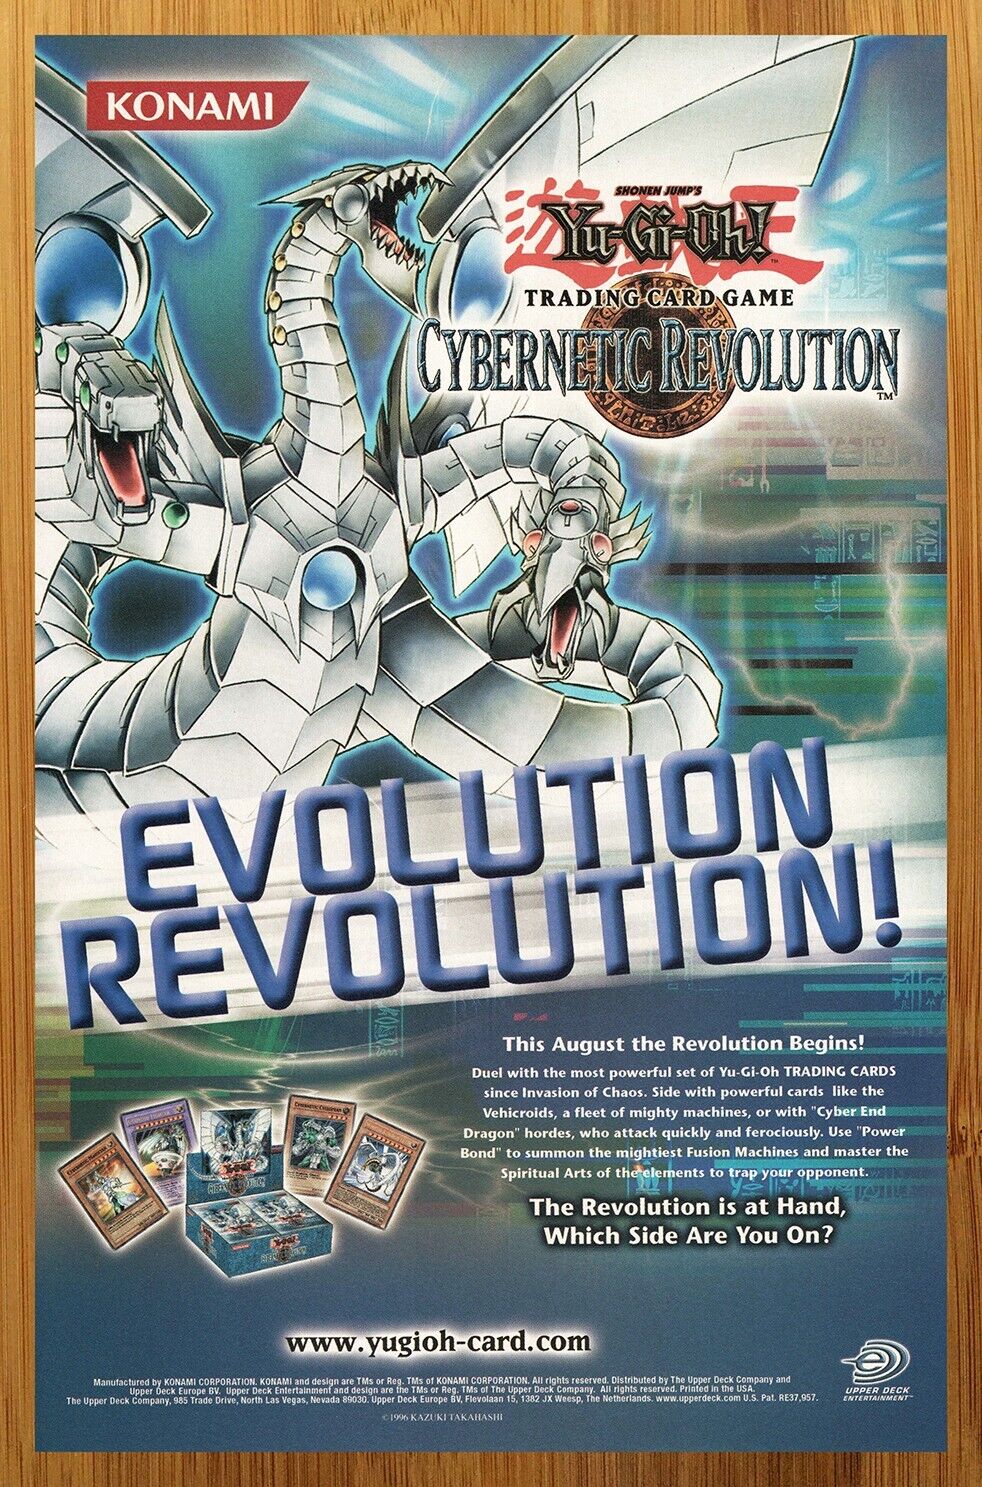 2005 Yu-Gi-Oh Cybernetic Revolution TCG Trading Cards Print Ad/Poster Promo Art